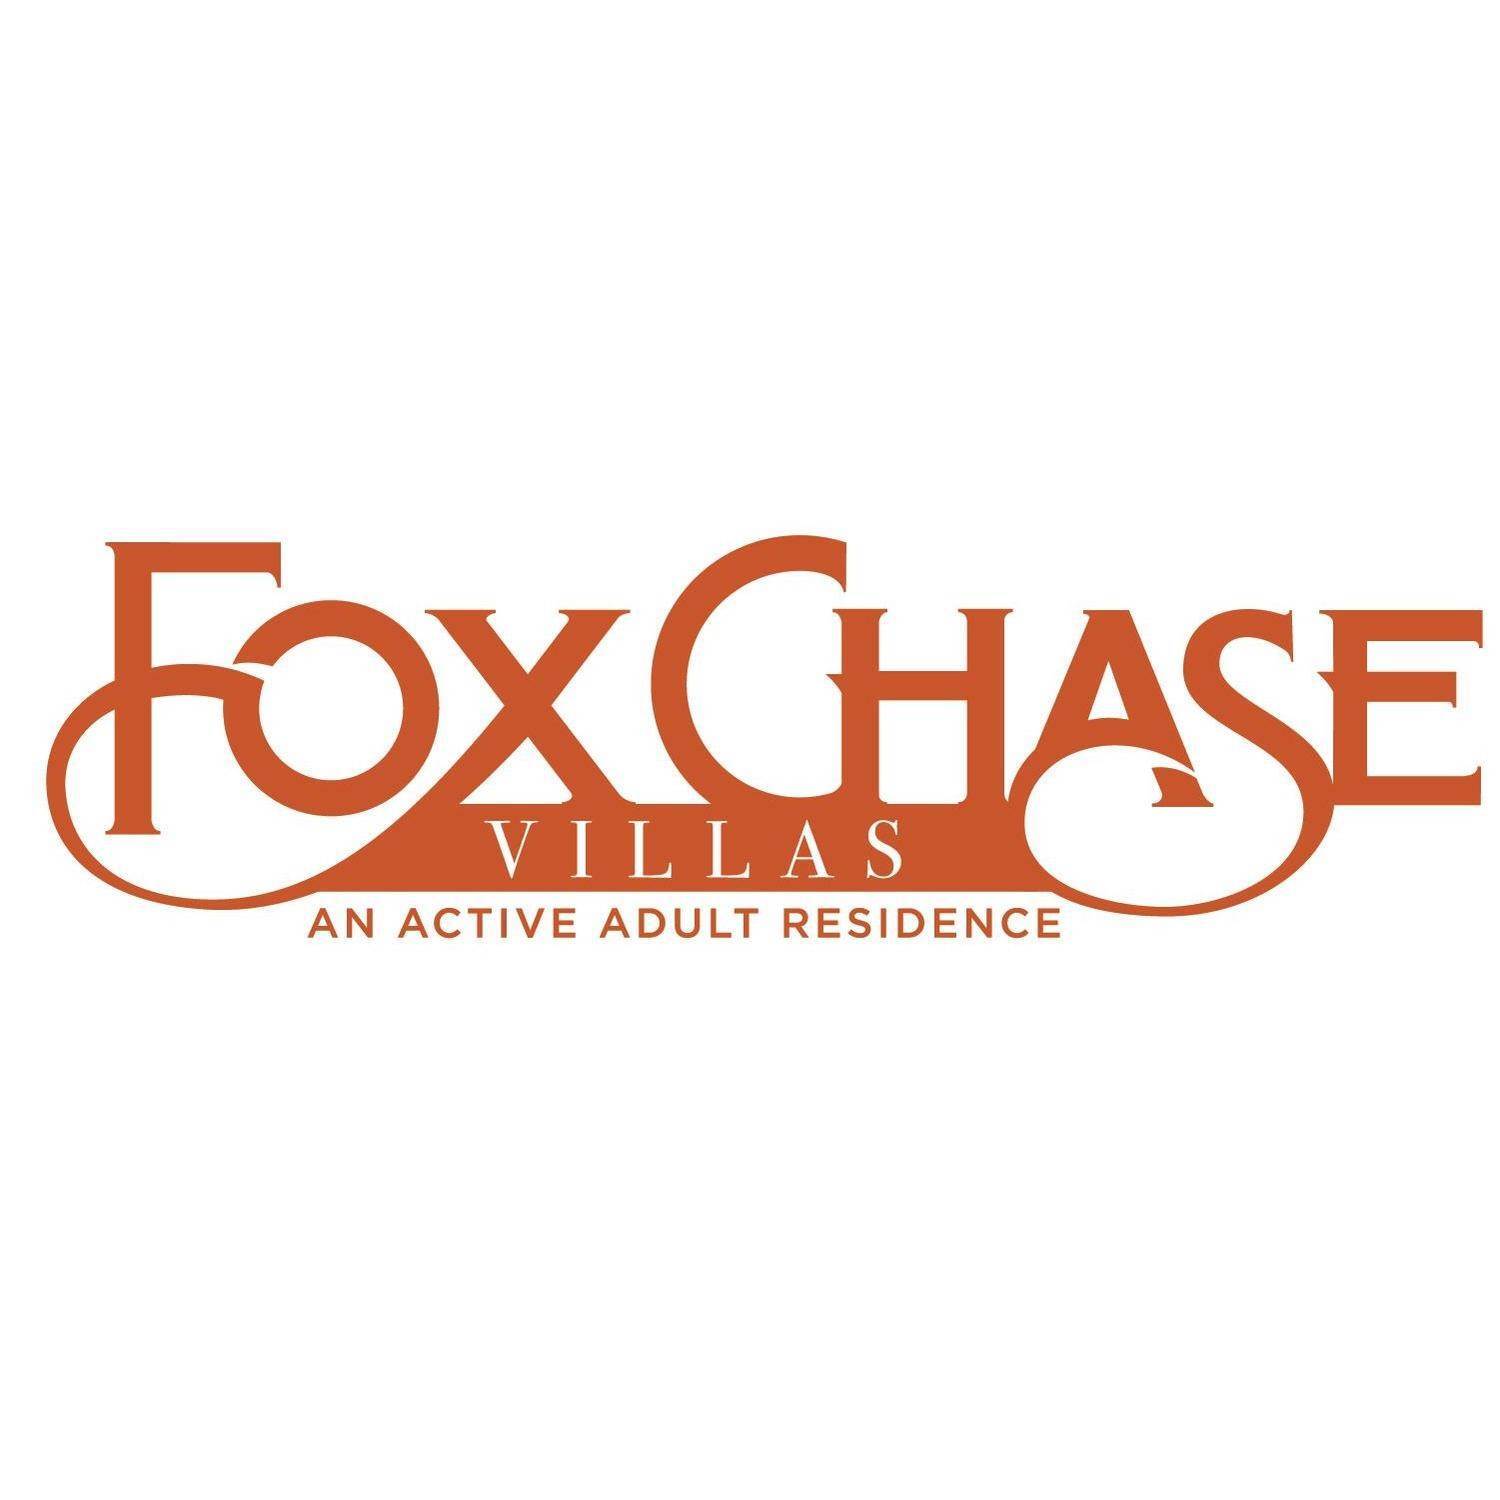 2. Fox Chase Villas xây dựng tại Markham Road, South Of Hwy Nn, Eagle, WI 53119